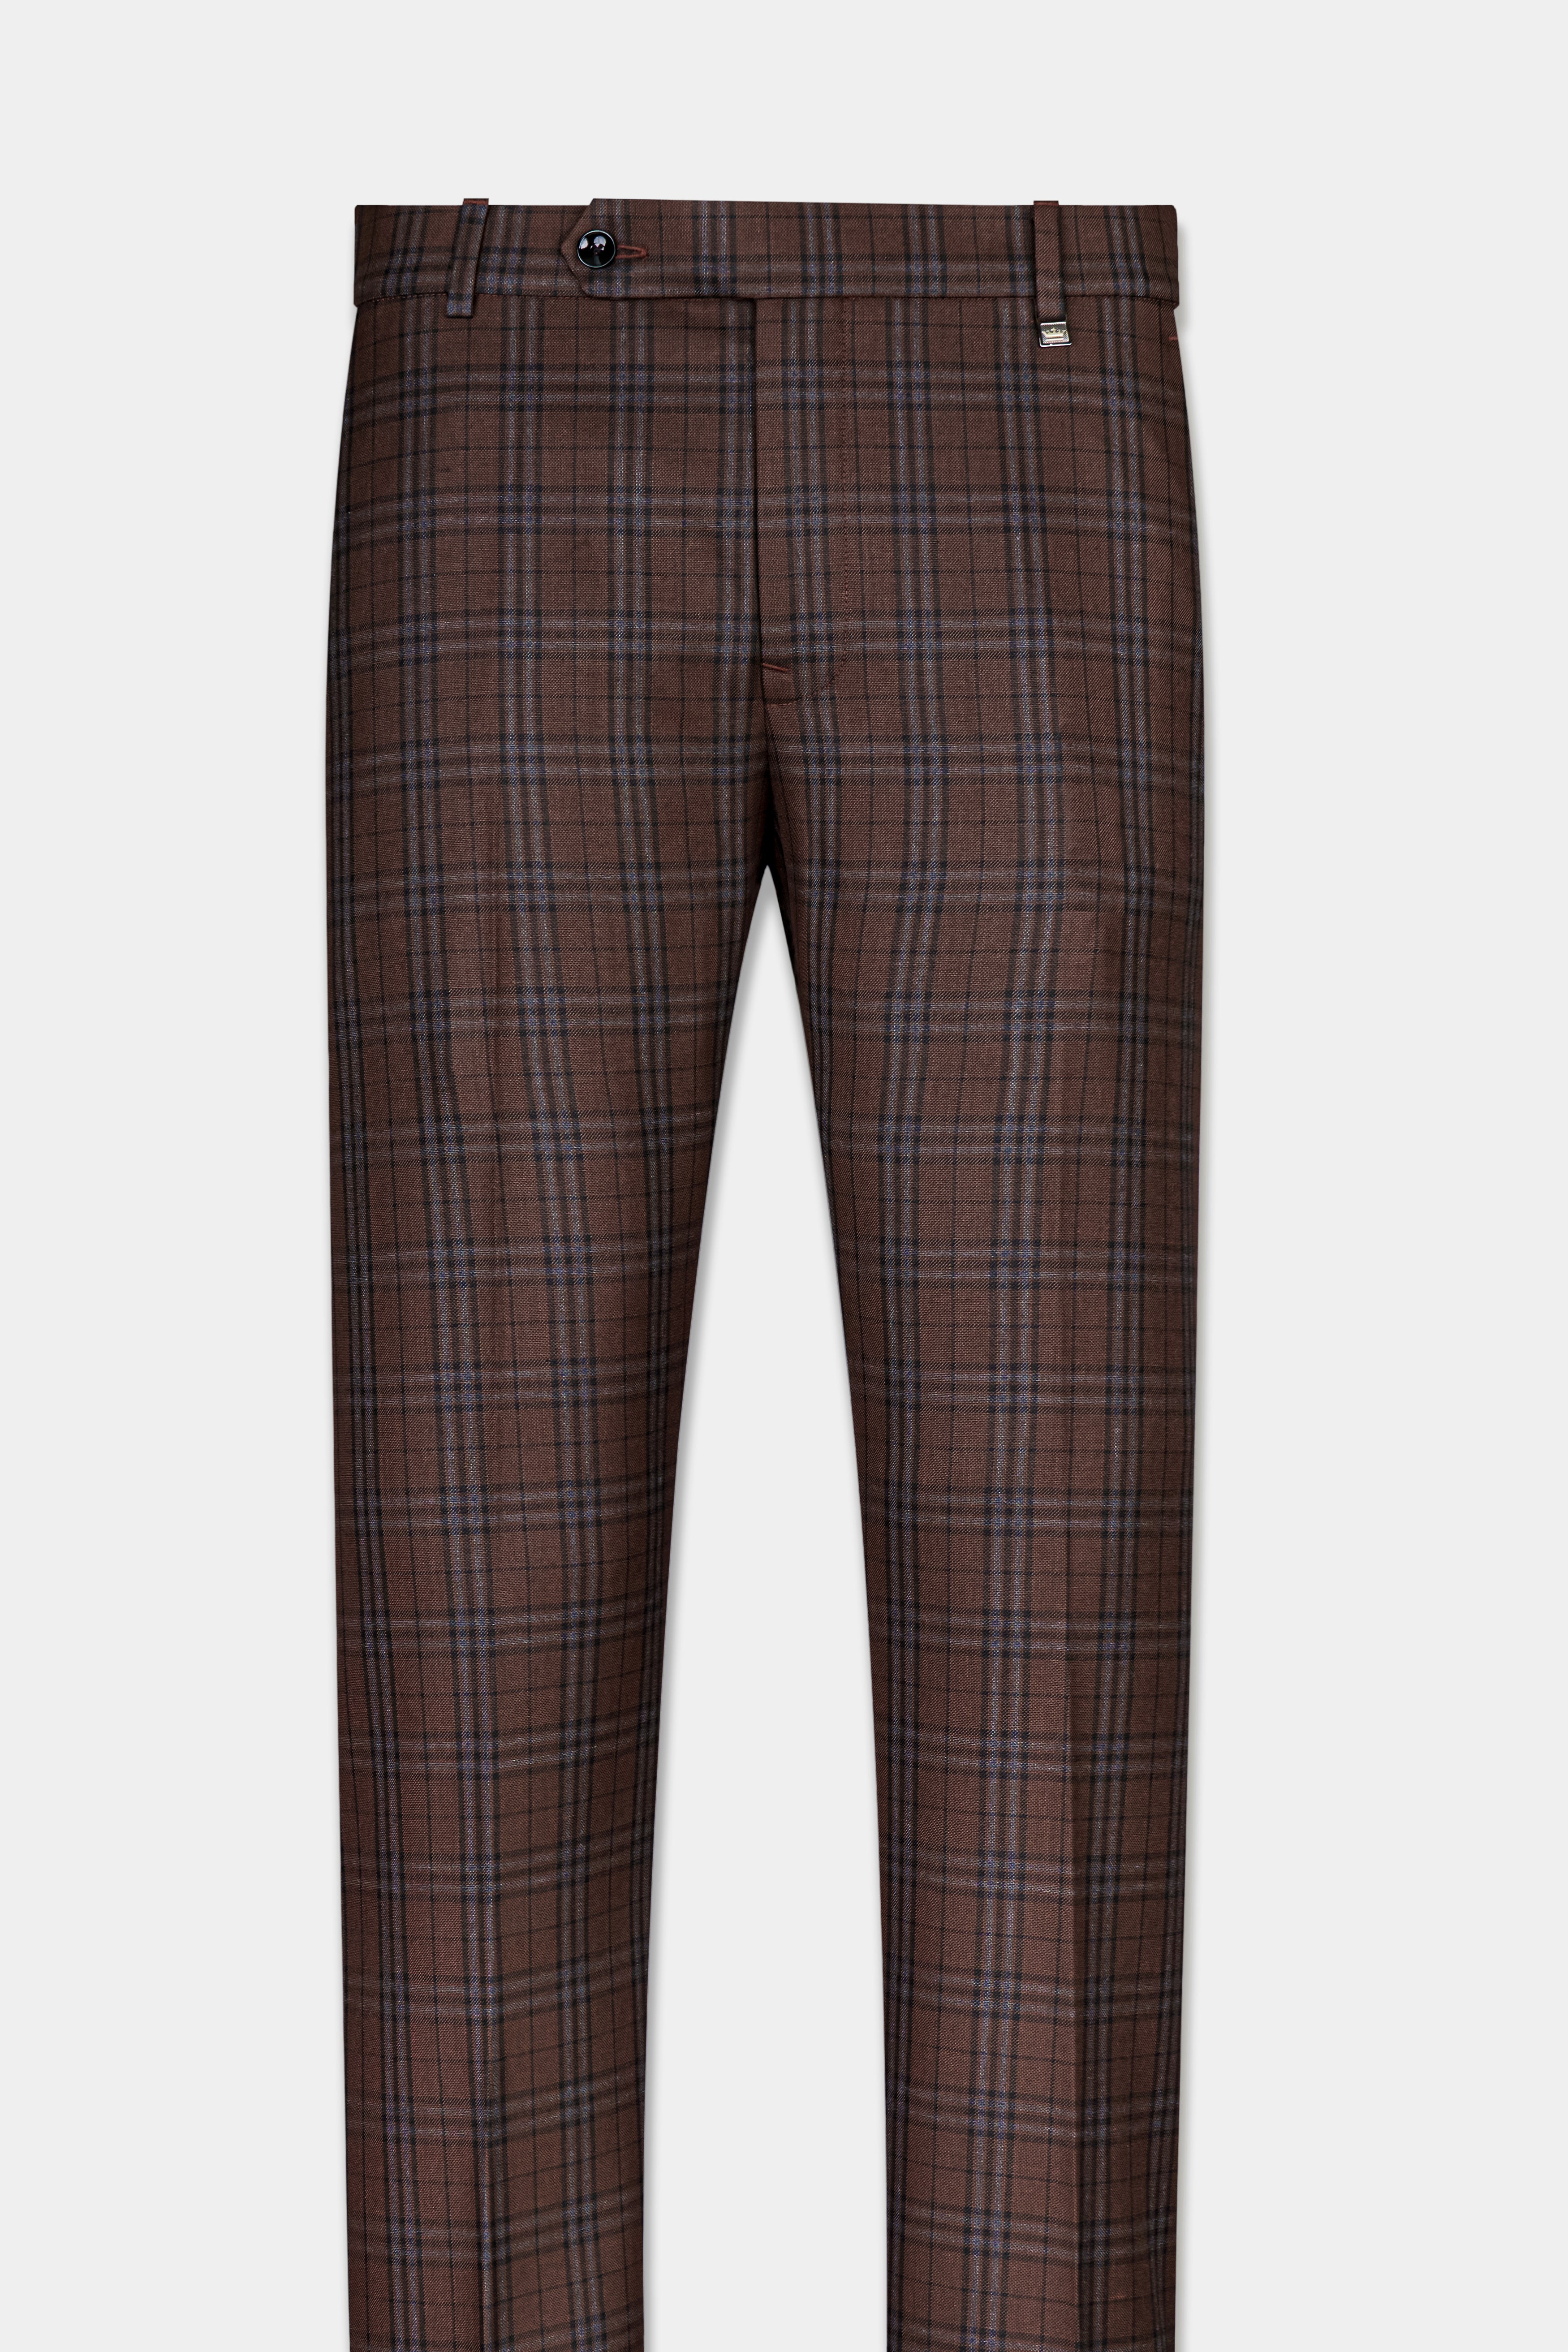 Buy Men Brown Check Slim Fit Formal Trousers Online - 586948 | Peter England